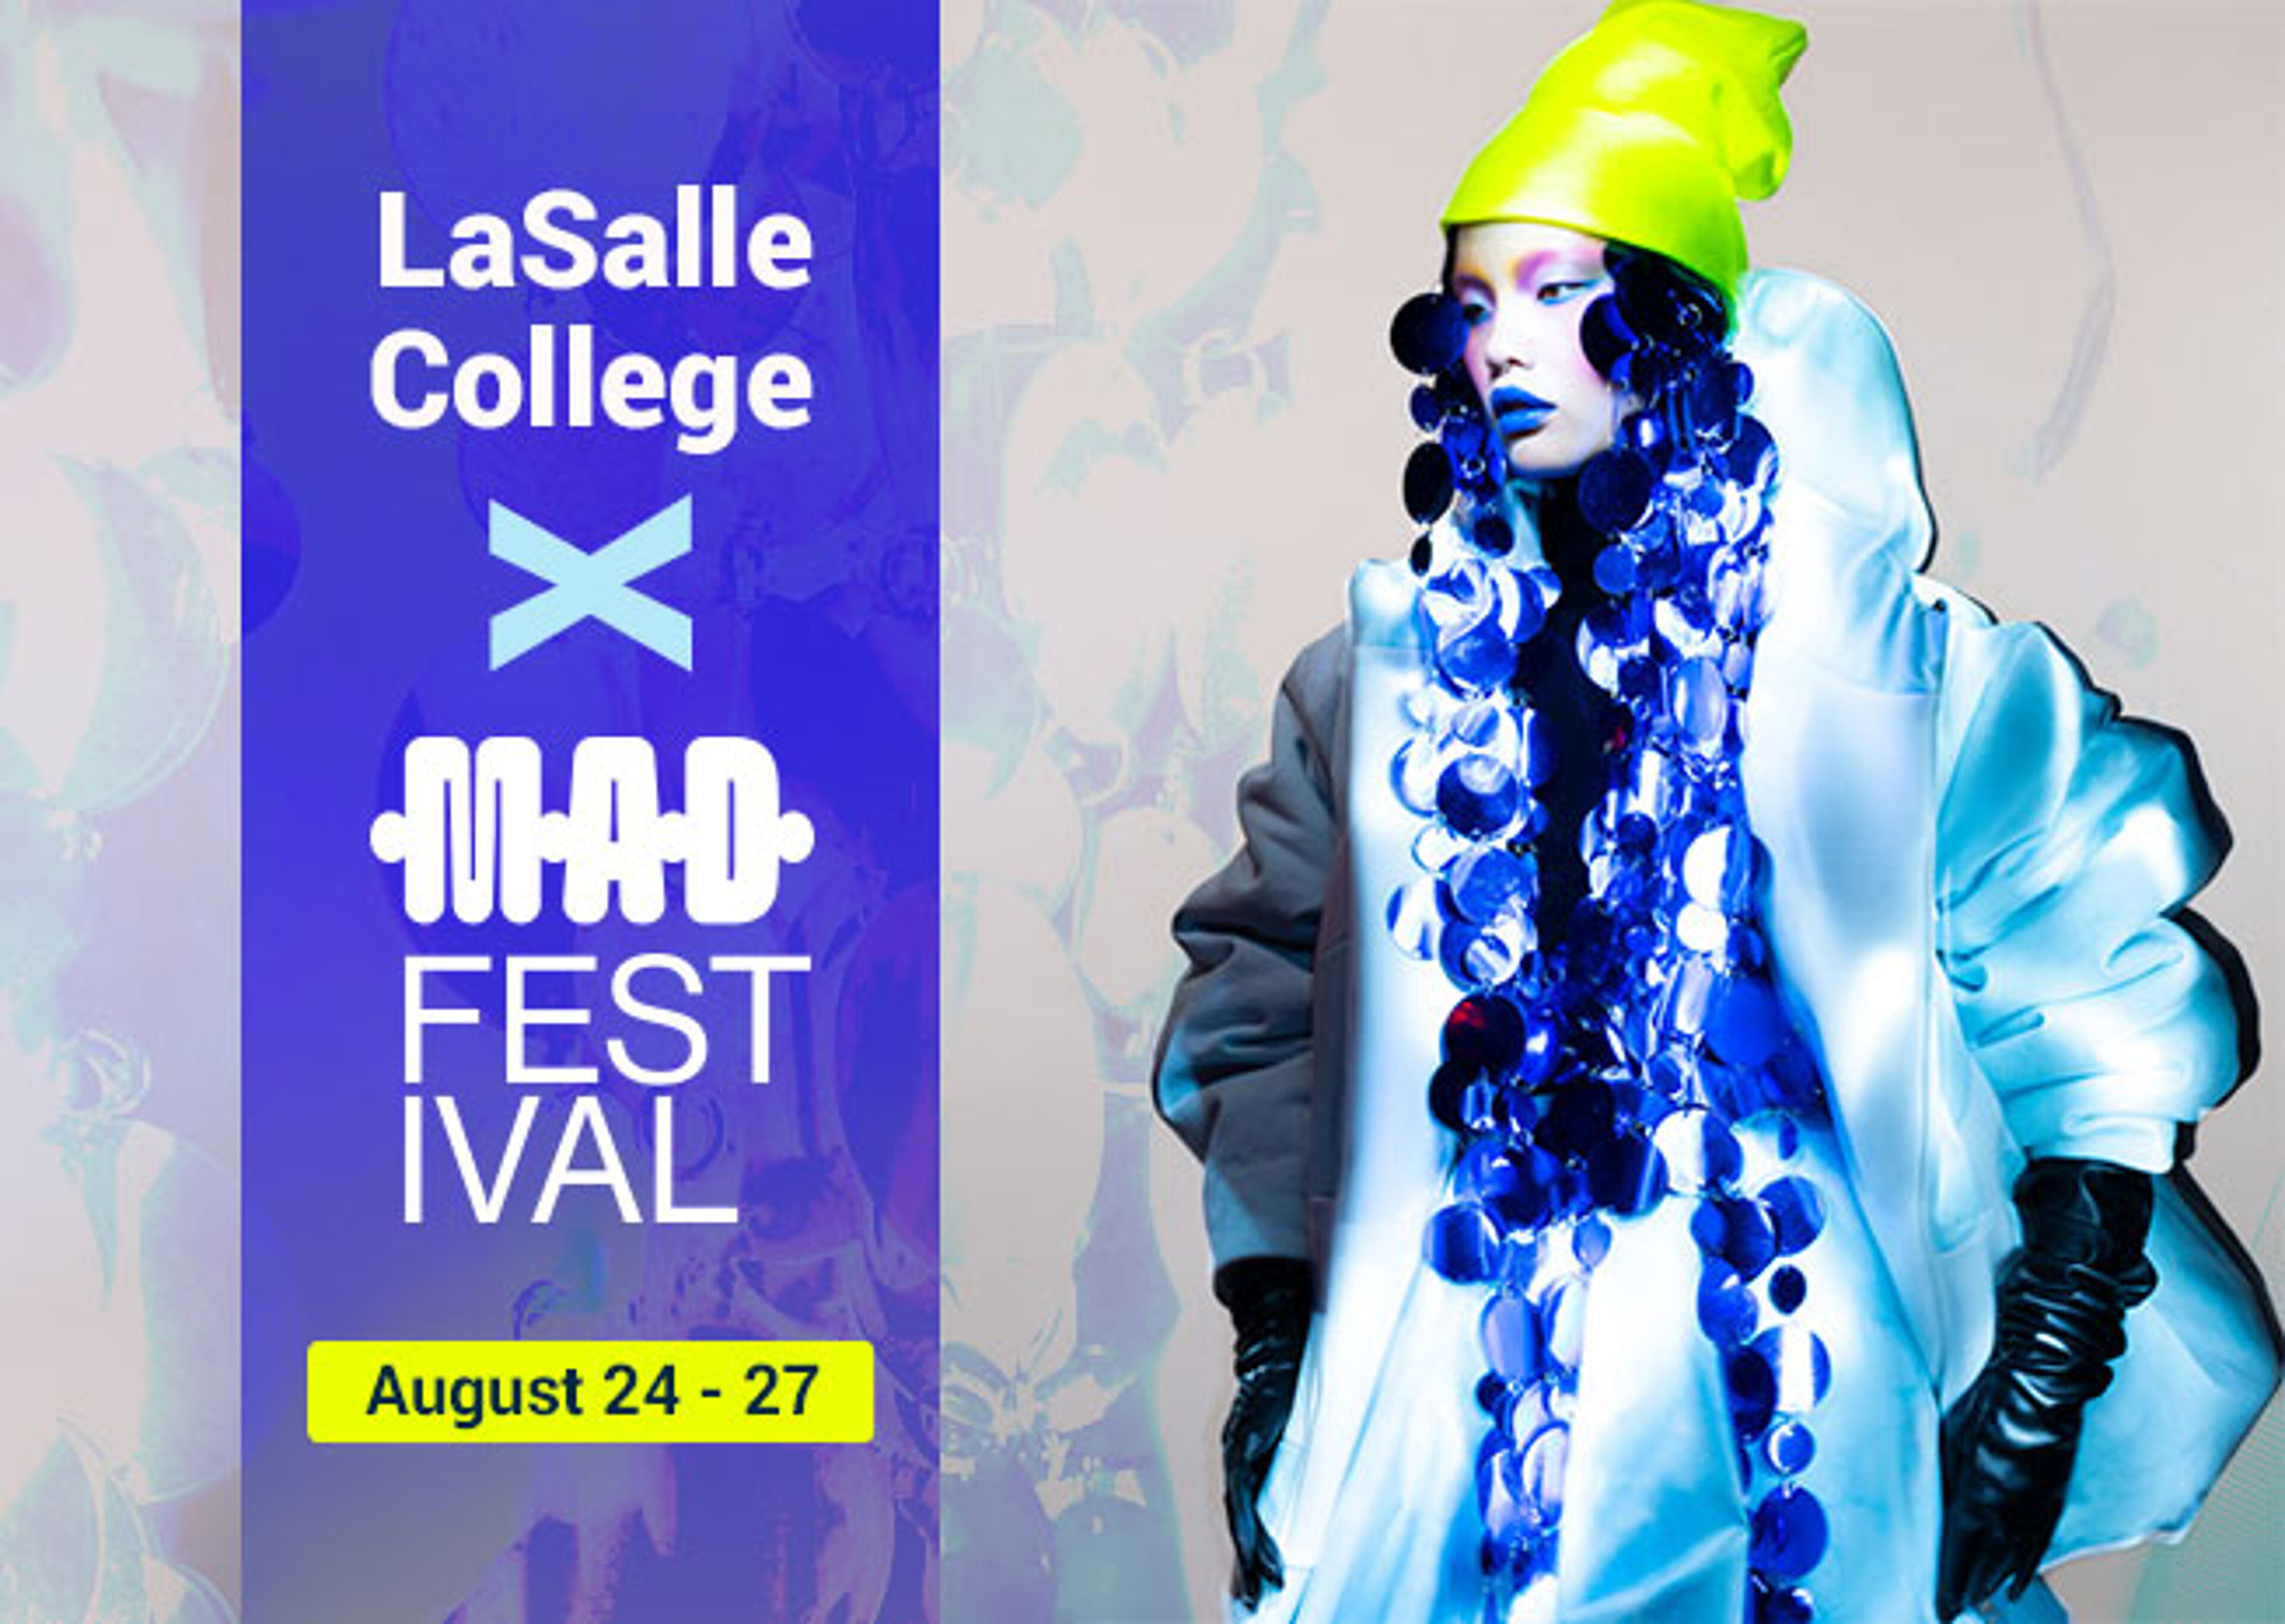 Advertisement for LaSalle College's fashion festival featuring a model in avant-garde attire.